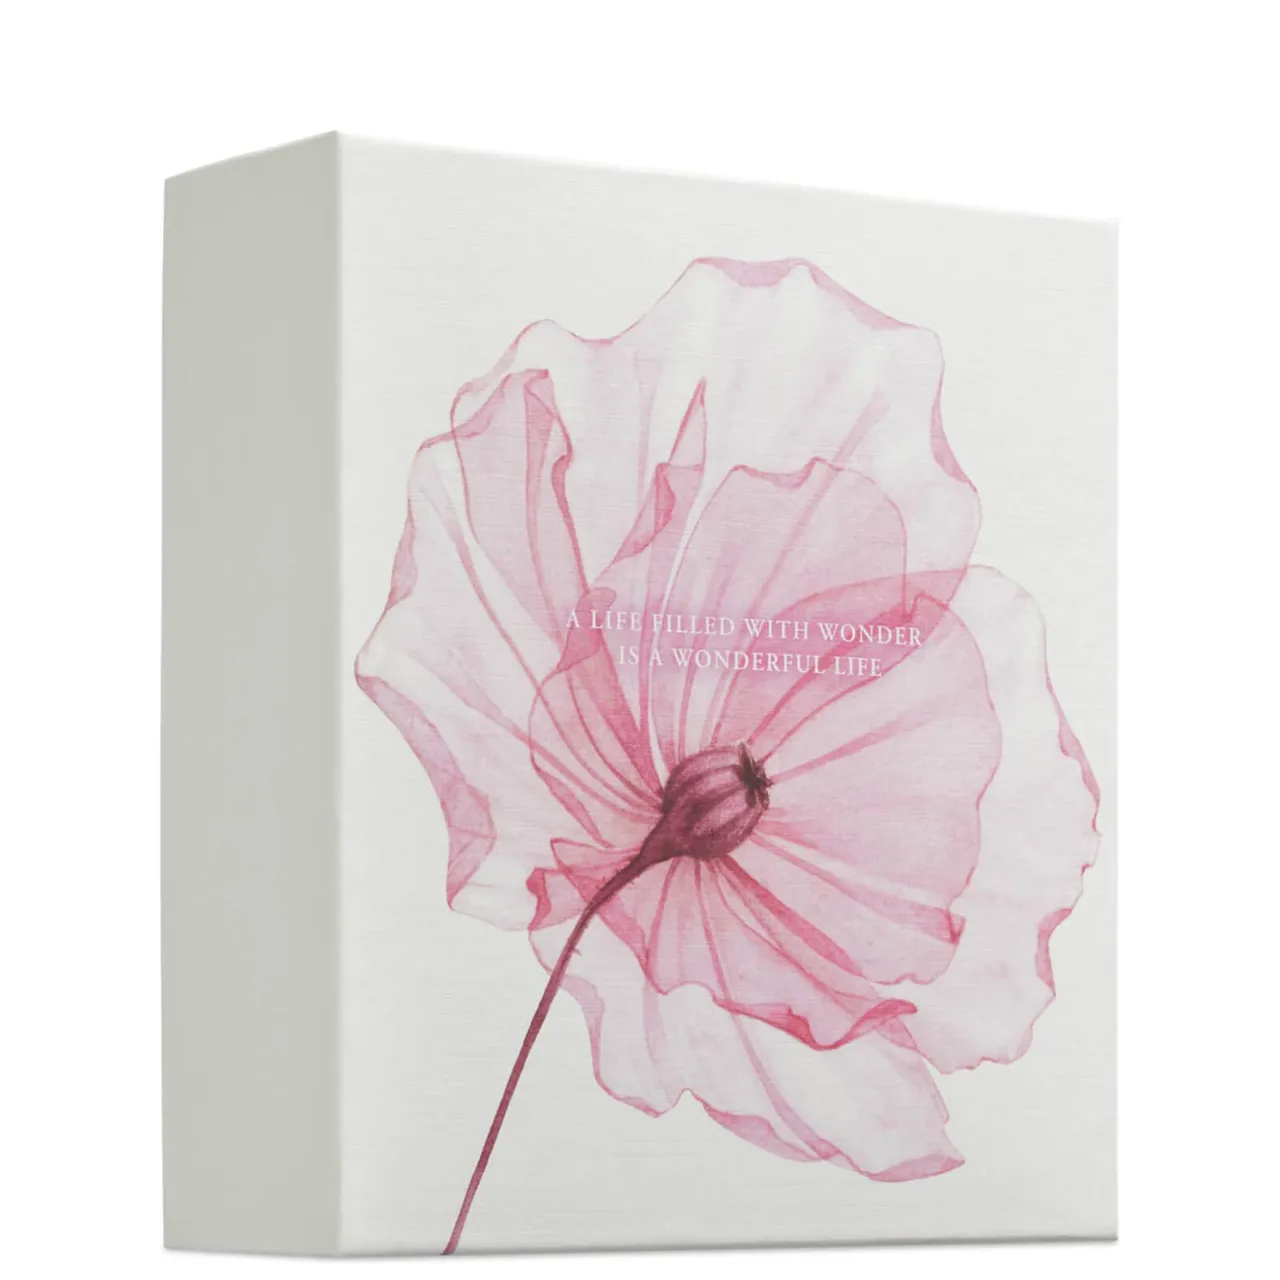 Rituals Core Gift Sets - Ritual of Sakura - Medium (Worth £48.90)